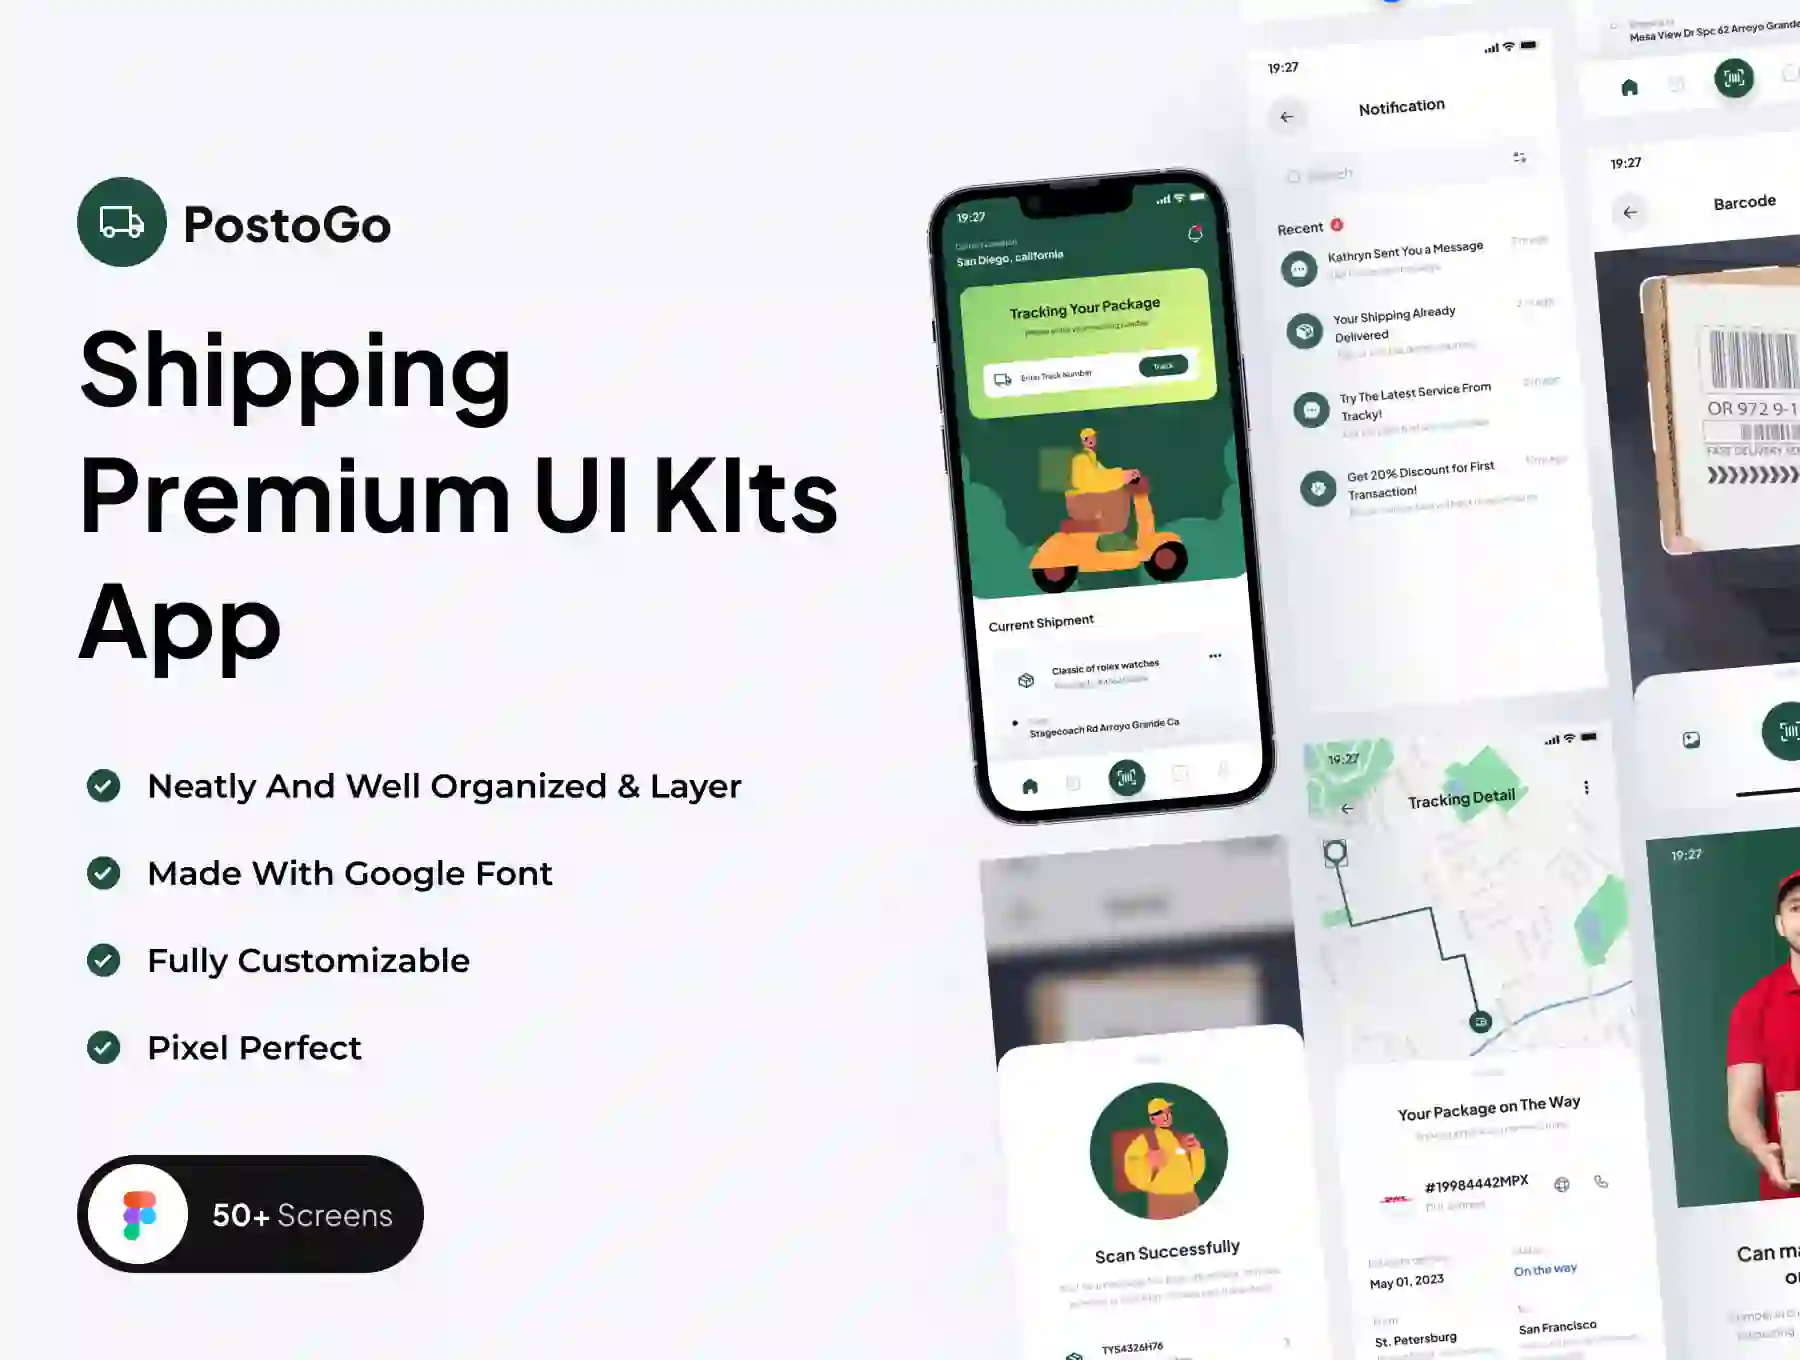 PostoGo - Shipping Premium UI KIts App